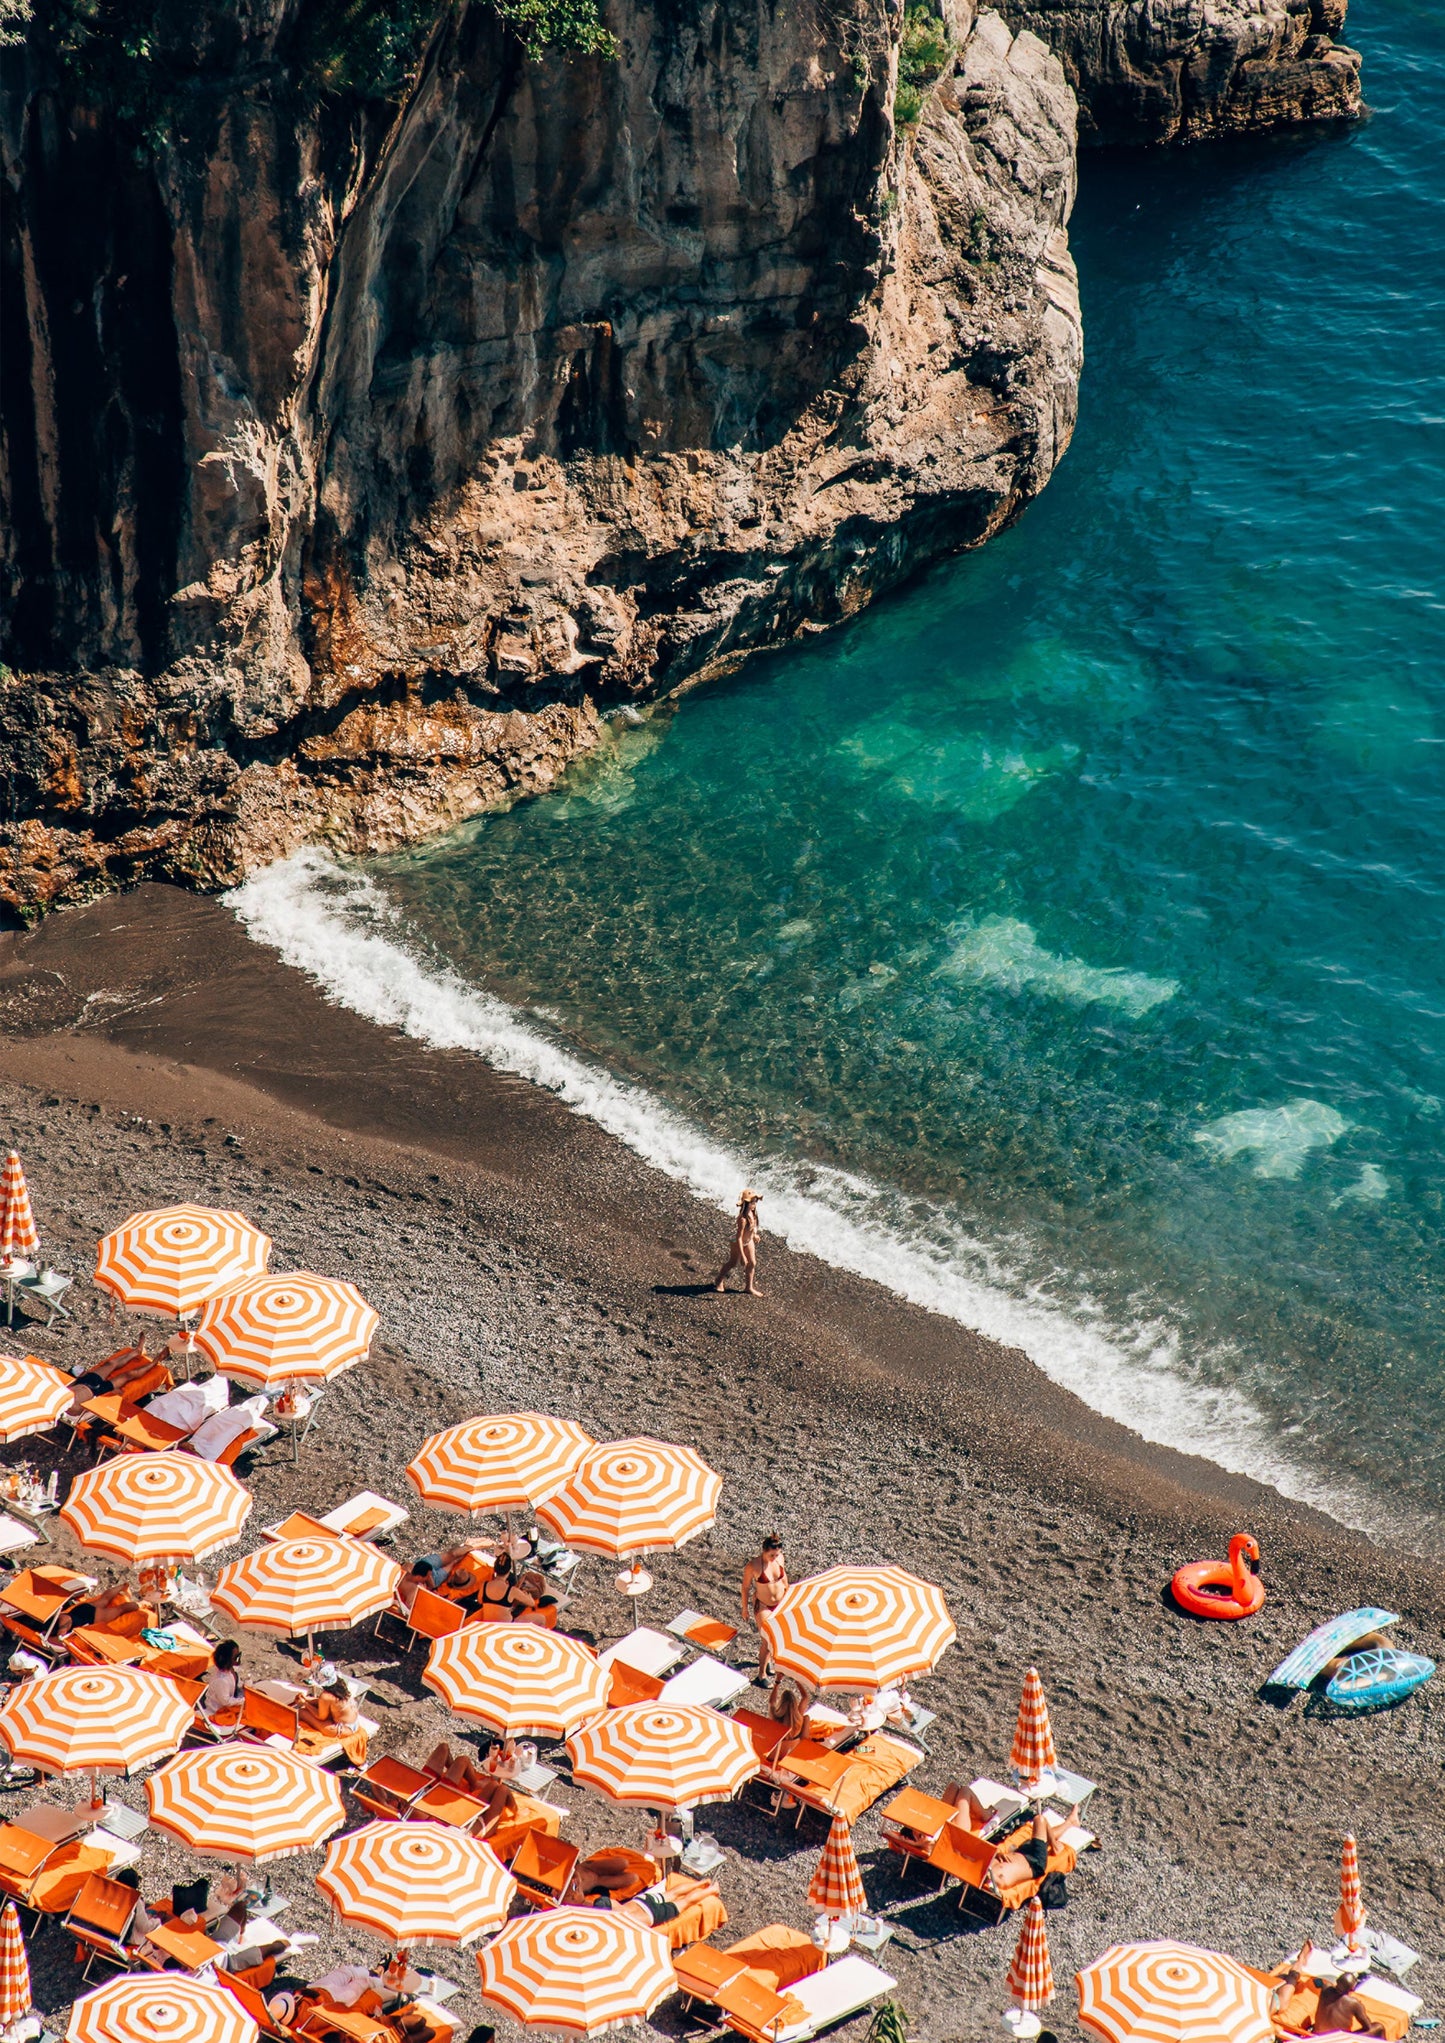 Arienzo Beach Club Umbrellas in Positano, Italy